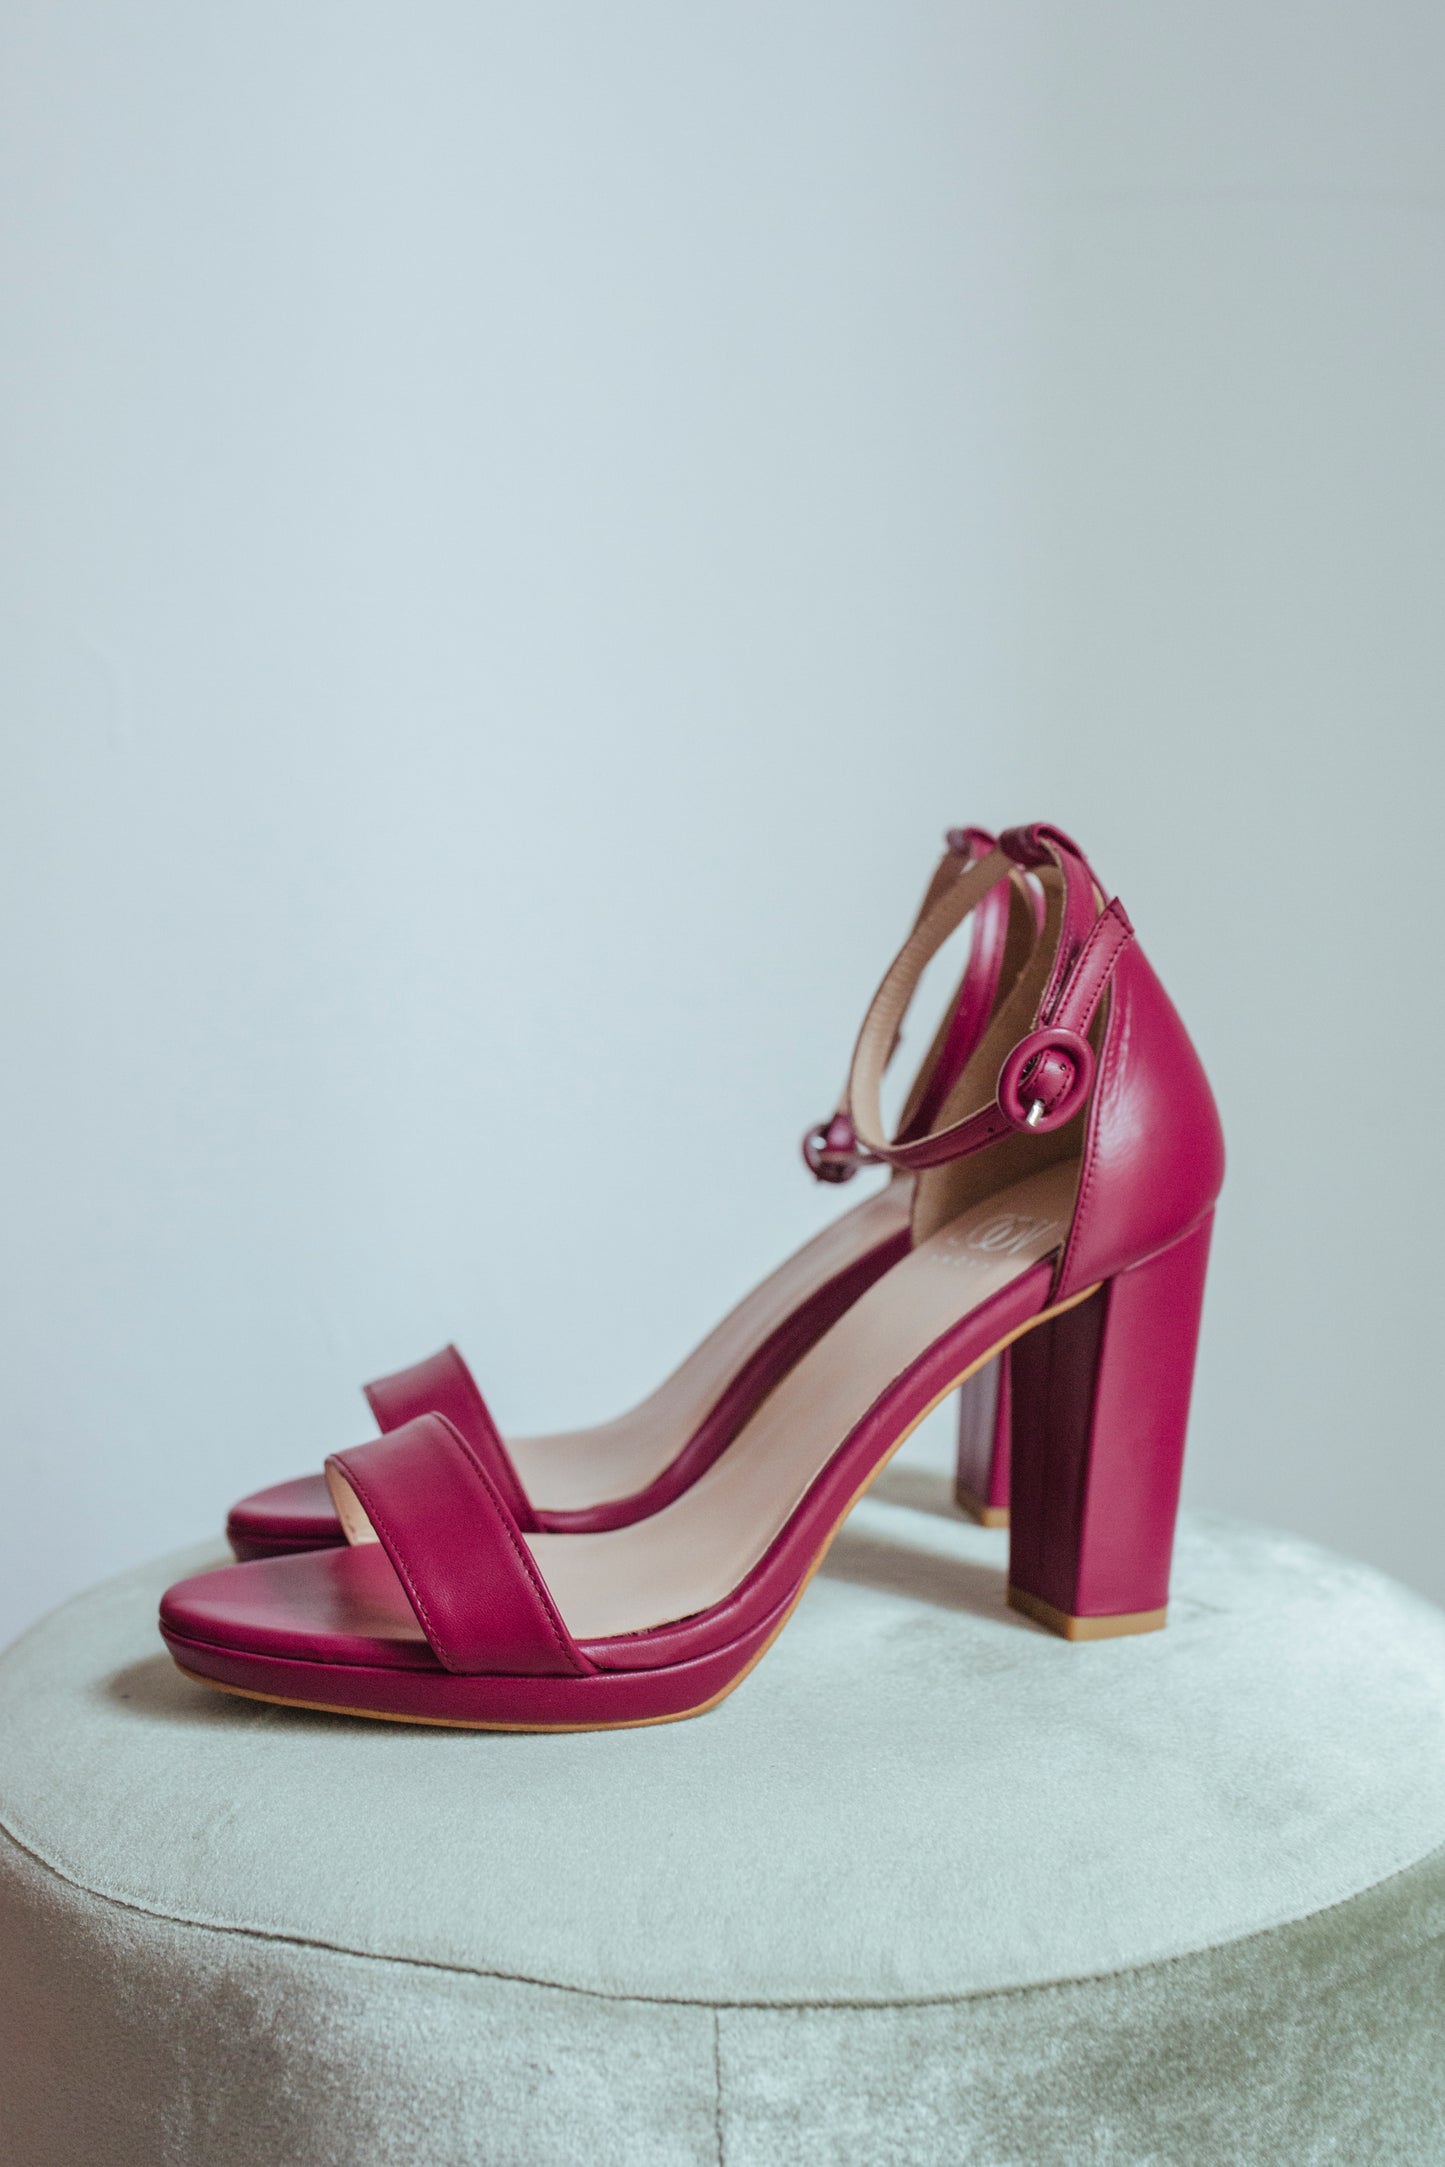 Alma Piel Vino de 8 cm-tipo salón-alma, liso, sandalia, tacon de 8, zapatos color vino-Loovshoes